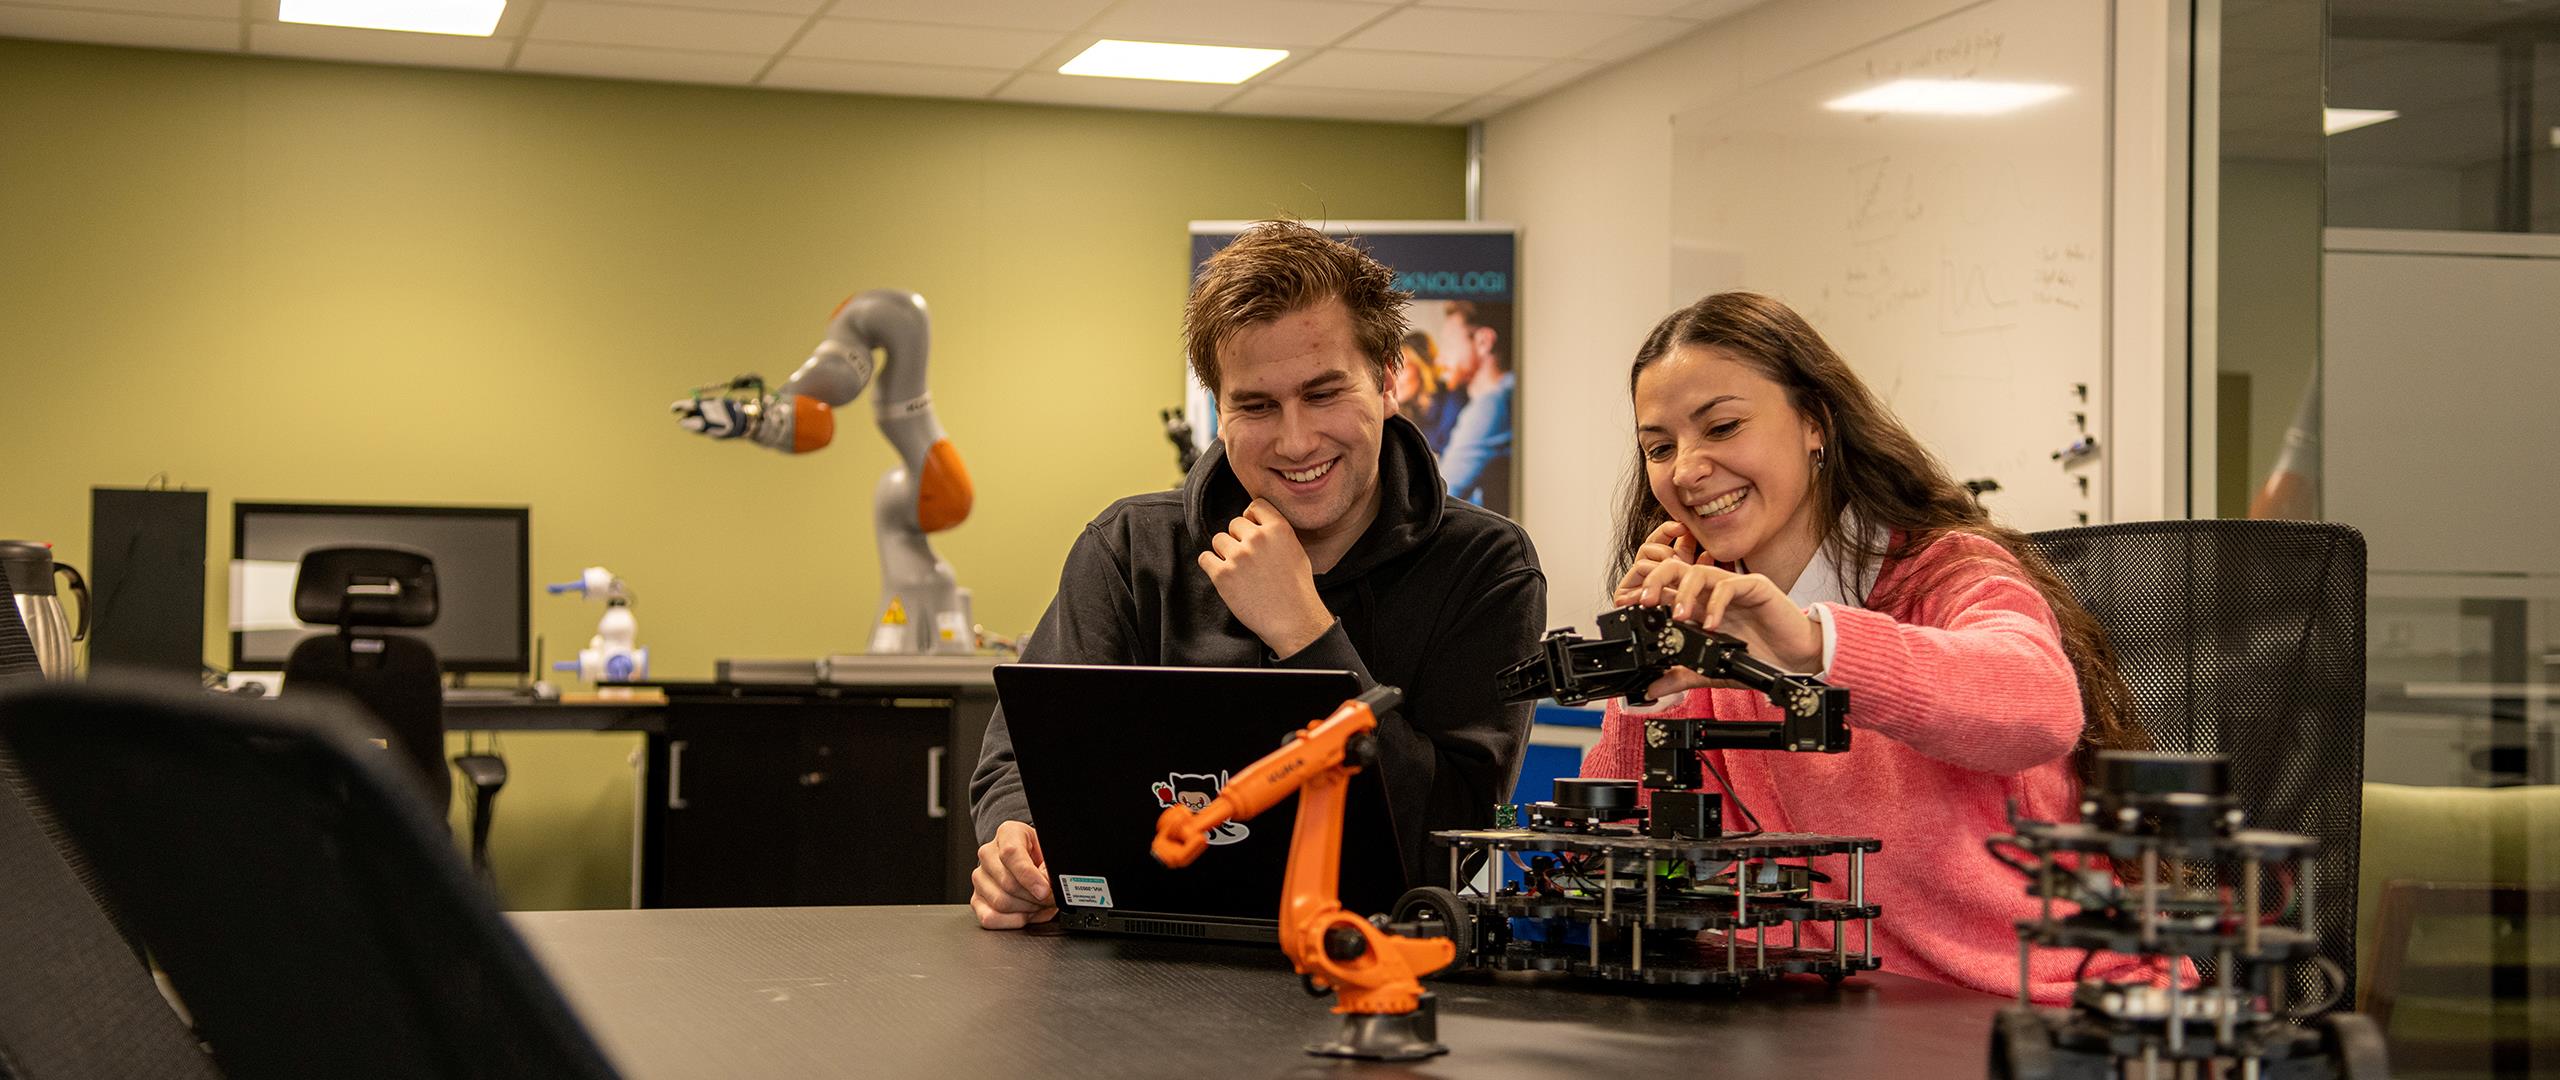 Blide ingeniørstudentar jobbar med robotløysingar (foto)